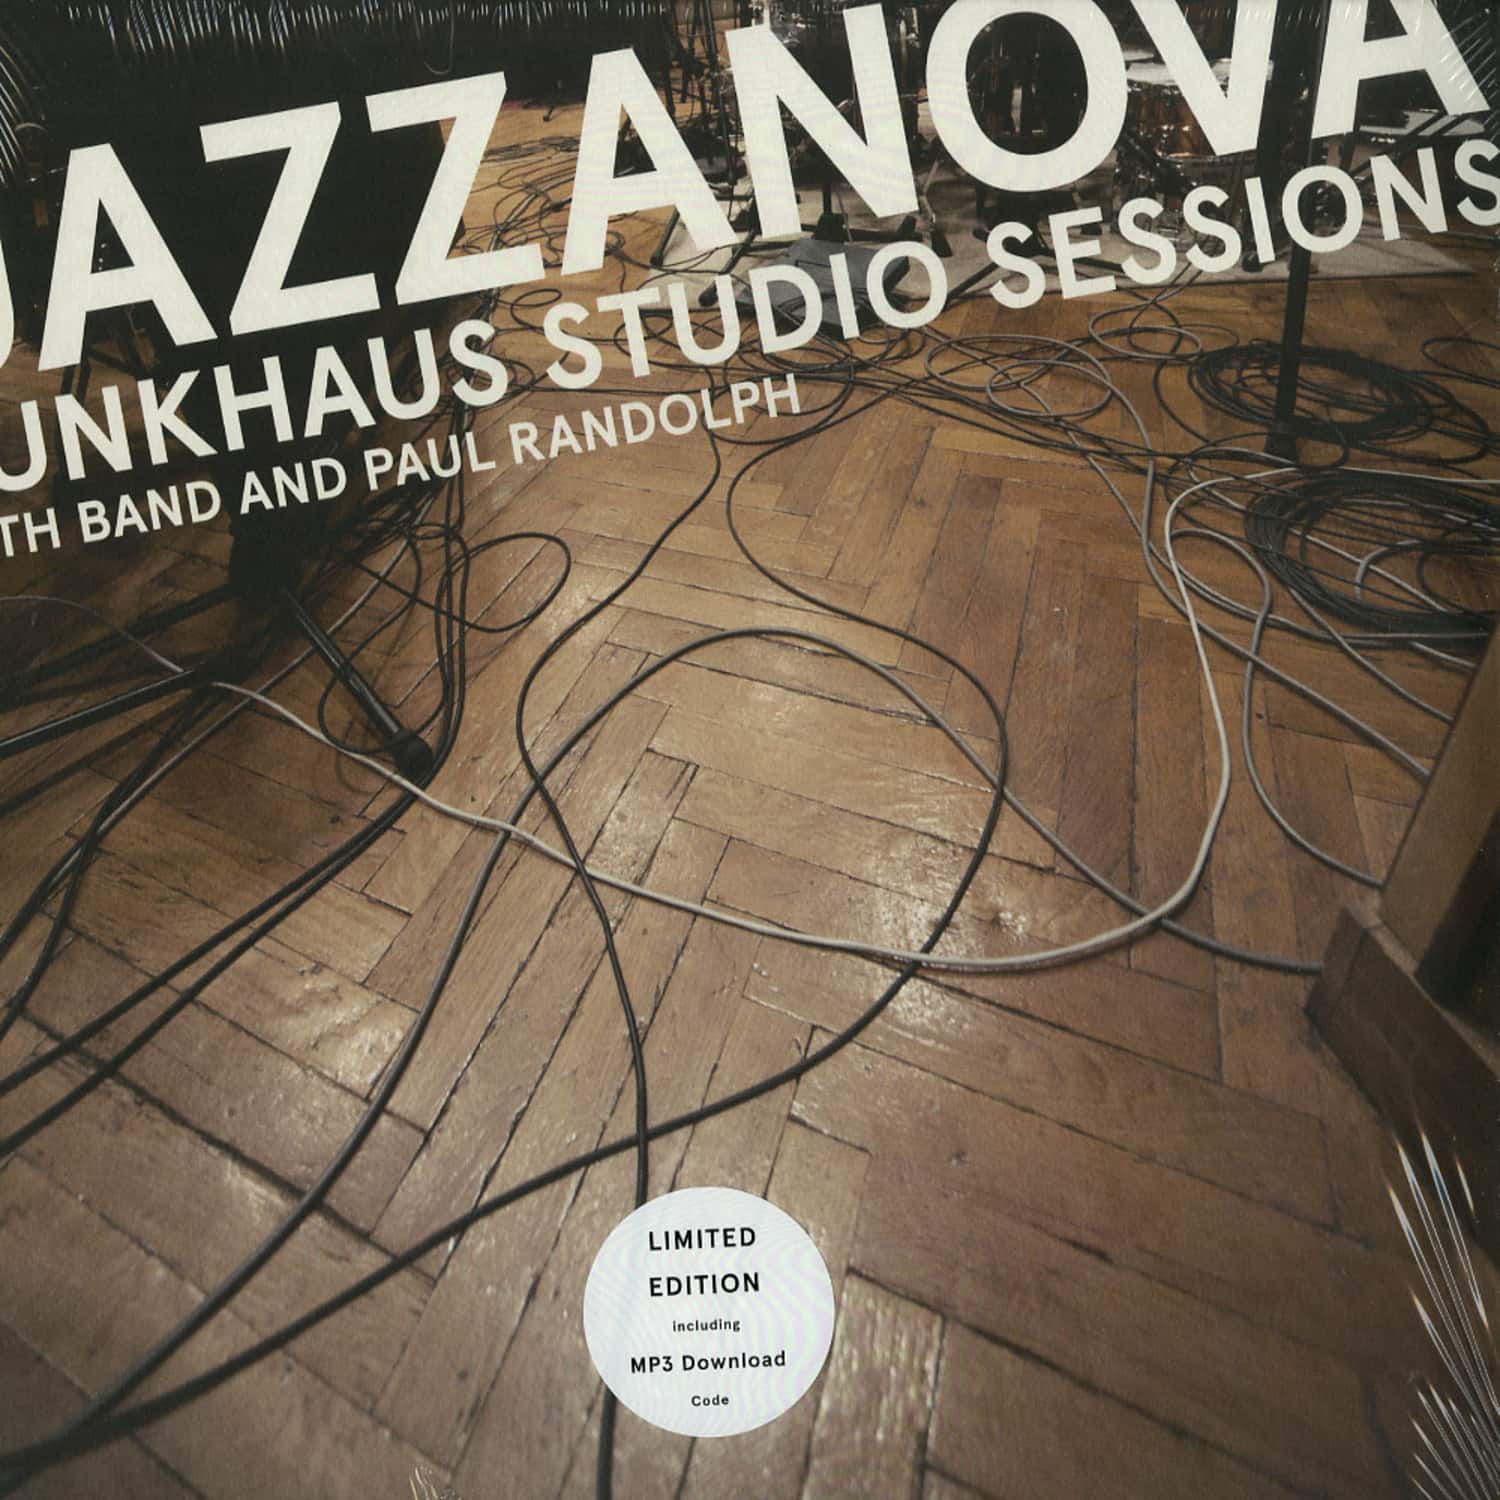 Jazzanova - FUNKHAUS STUDIO SESSIONS - WITH BAND AND PAUL RANDOLPH 